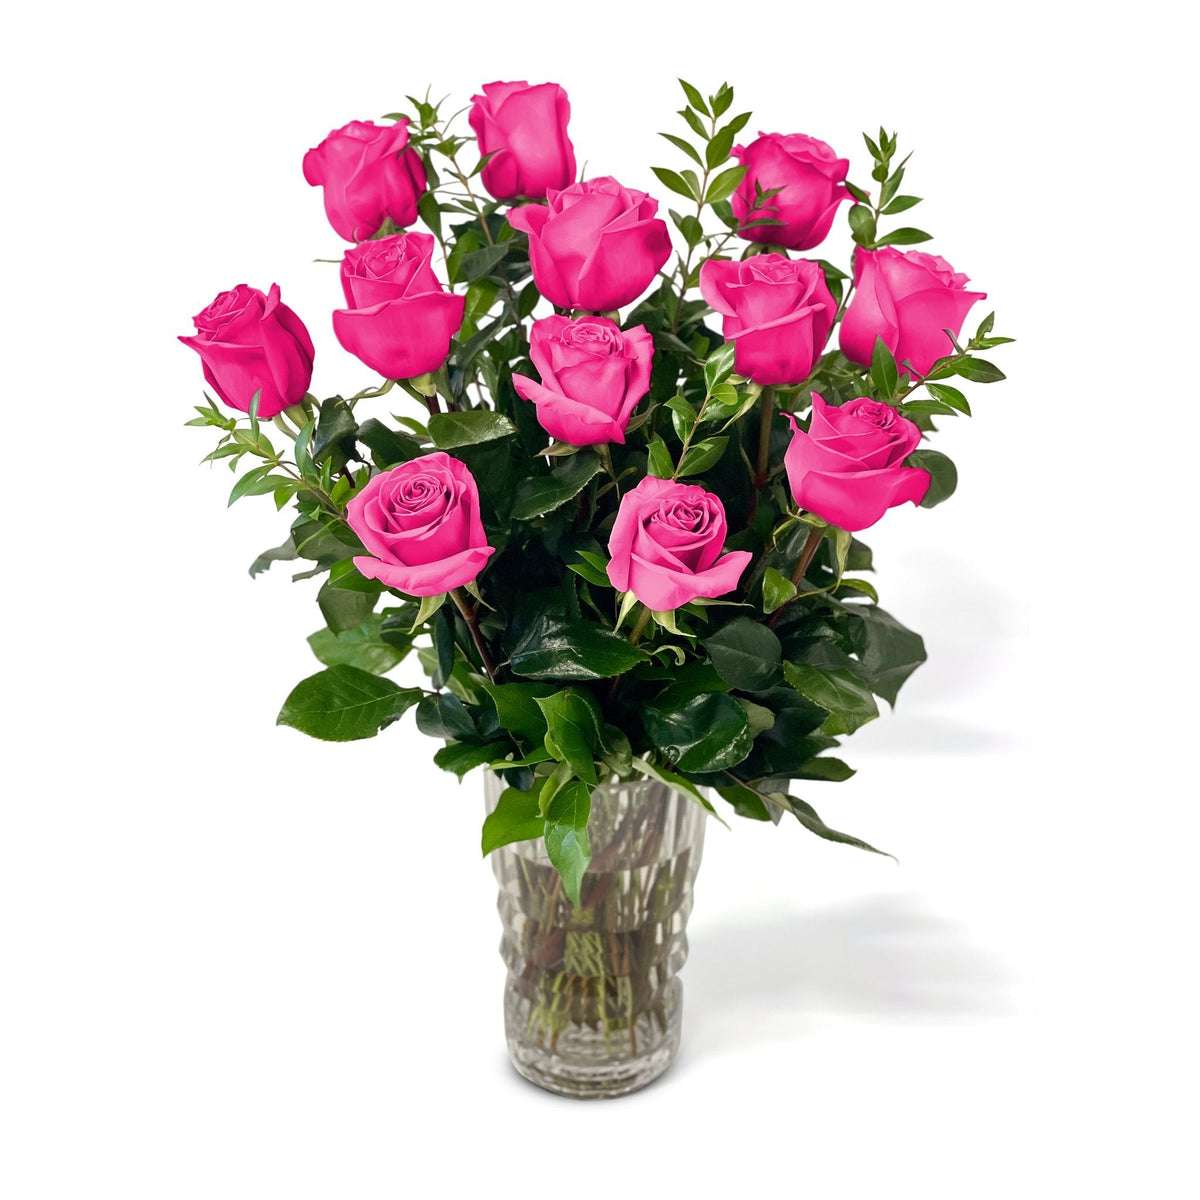 Queens Flower Delivery - Fresh Roses in a Crystal Vase | Dozen Hot Pink